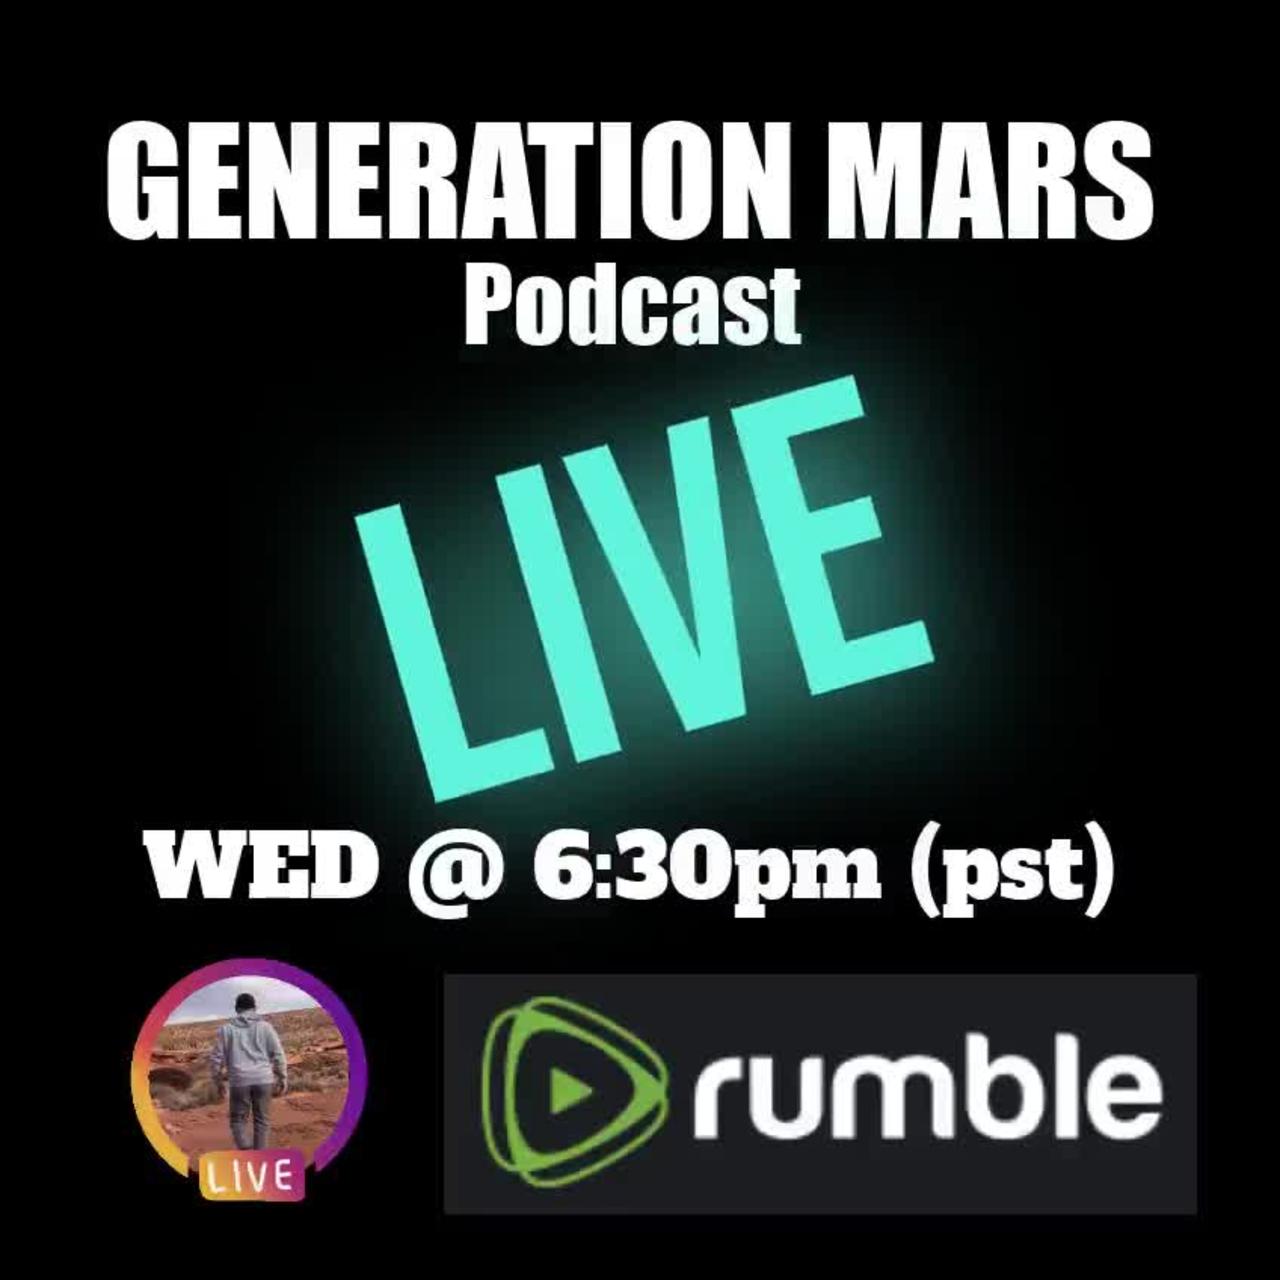 GENERATION MARS Podcast LIVE tonight NOV 16th WED. 6:30pm (pst)